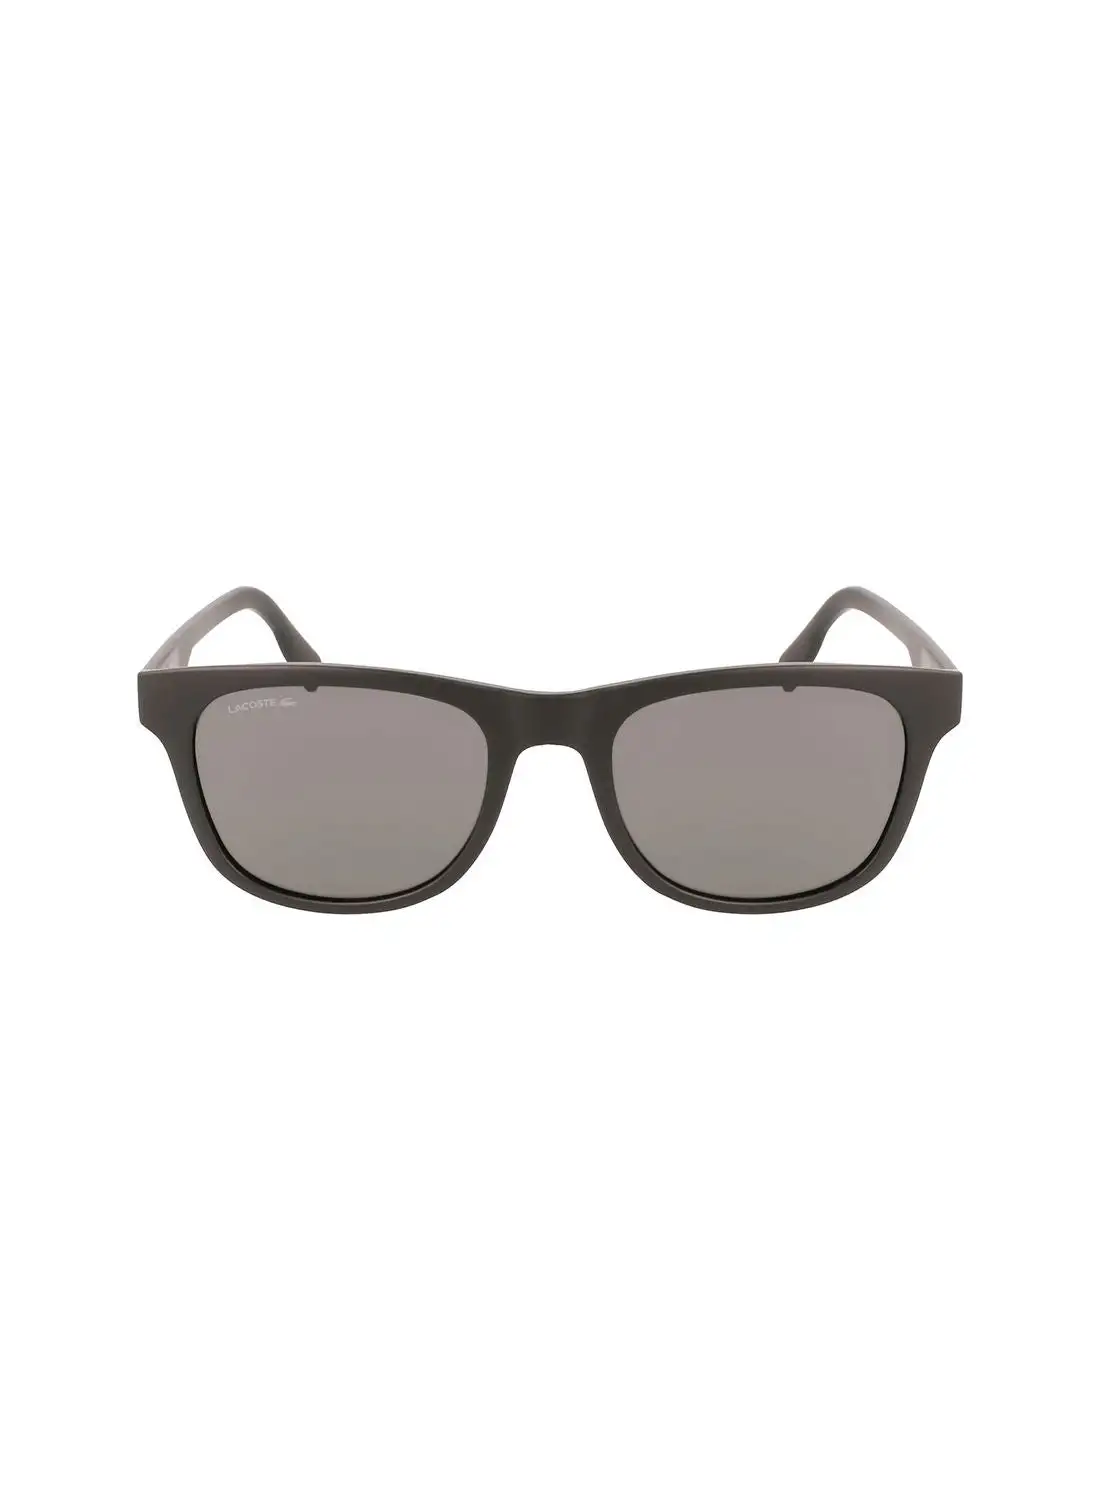 LACOSTE UV Rays Protection Eyewear Sunglasses L969S-002-5420